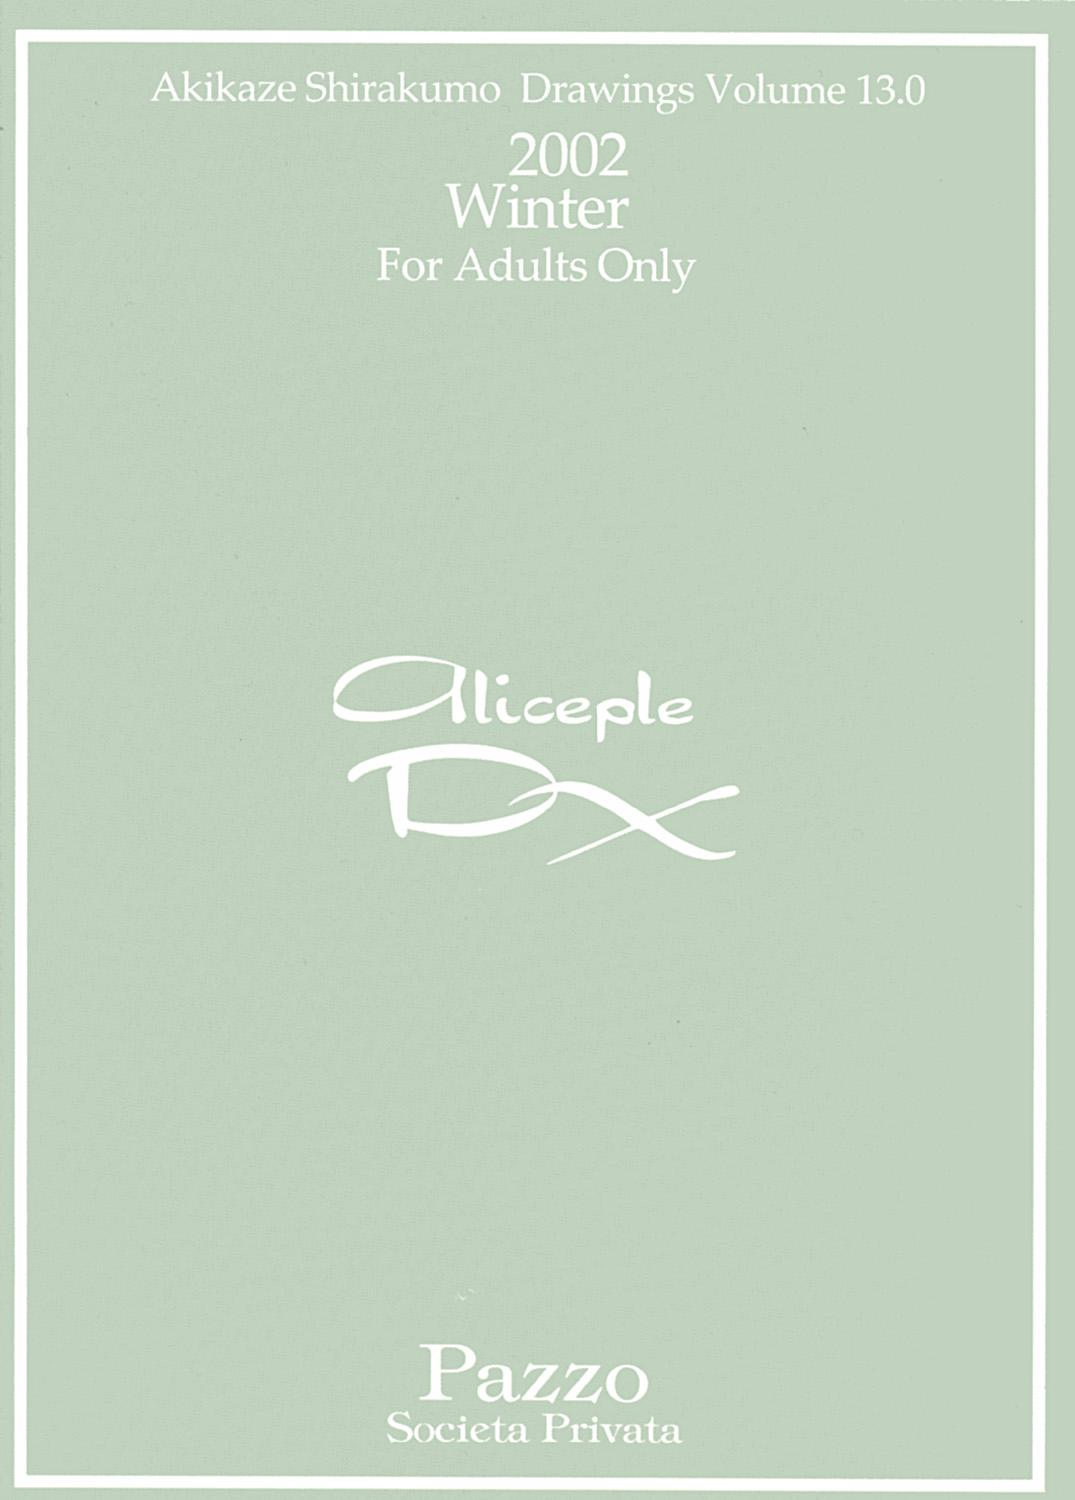 Aliceple DX 33